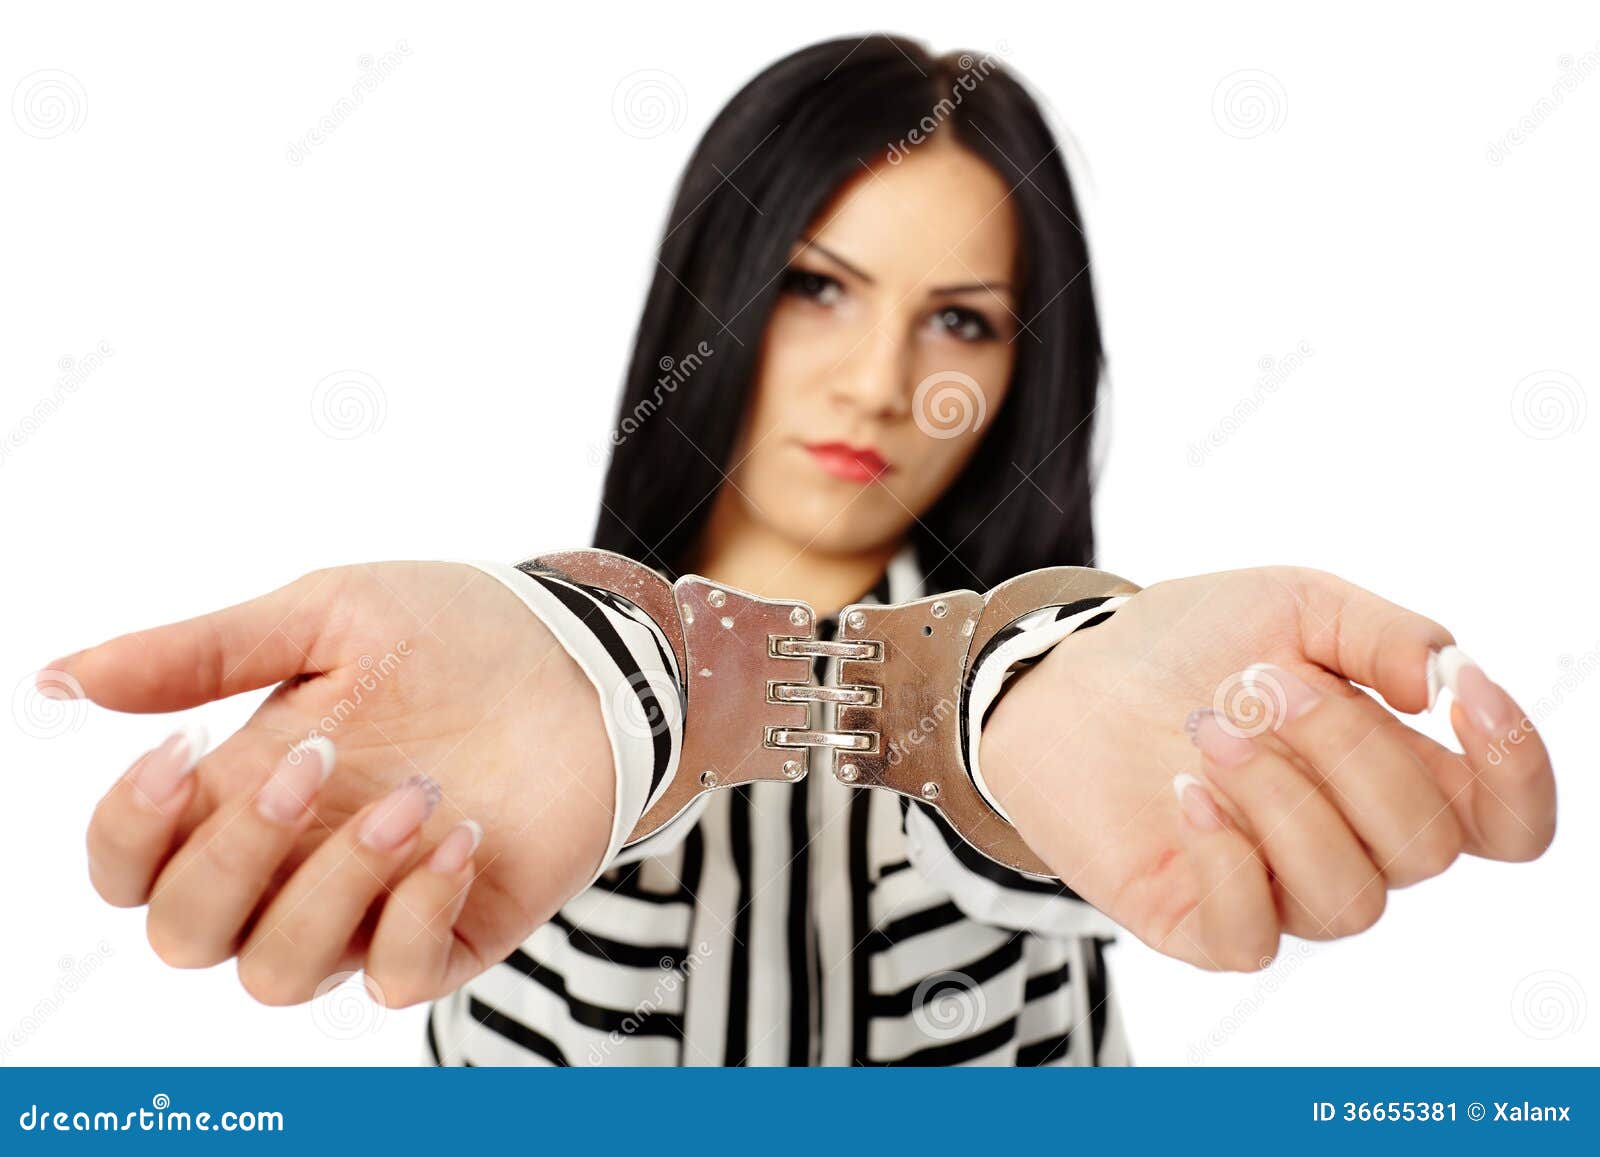 Handcuffing ladies